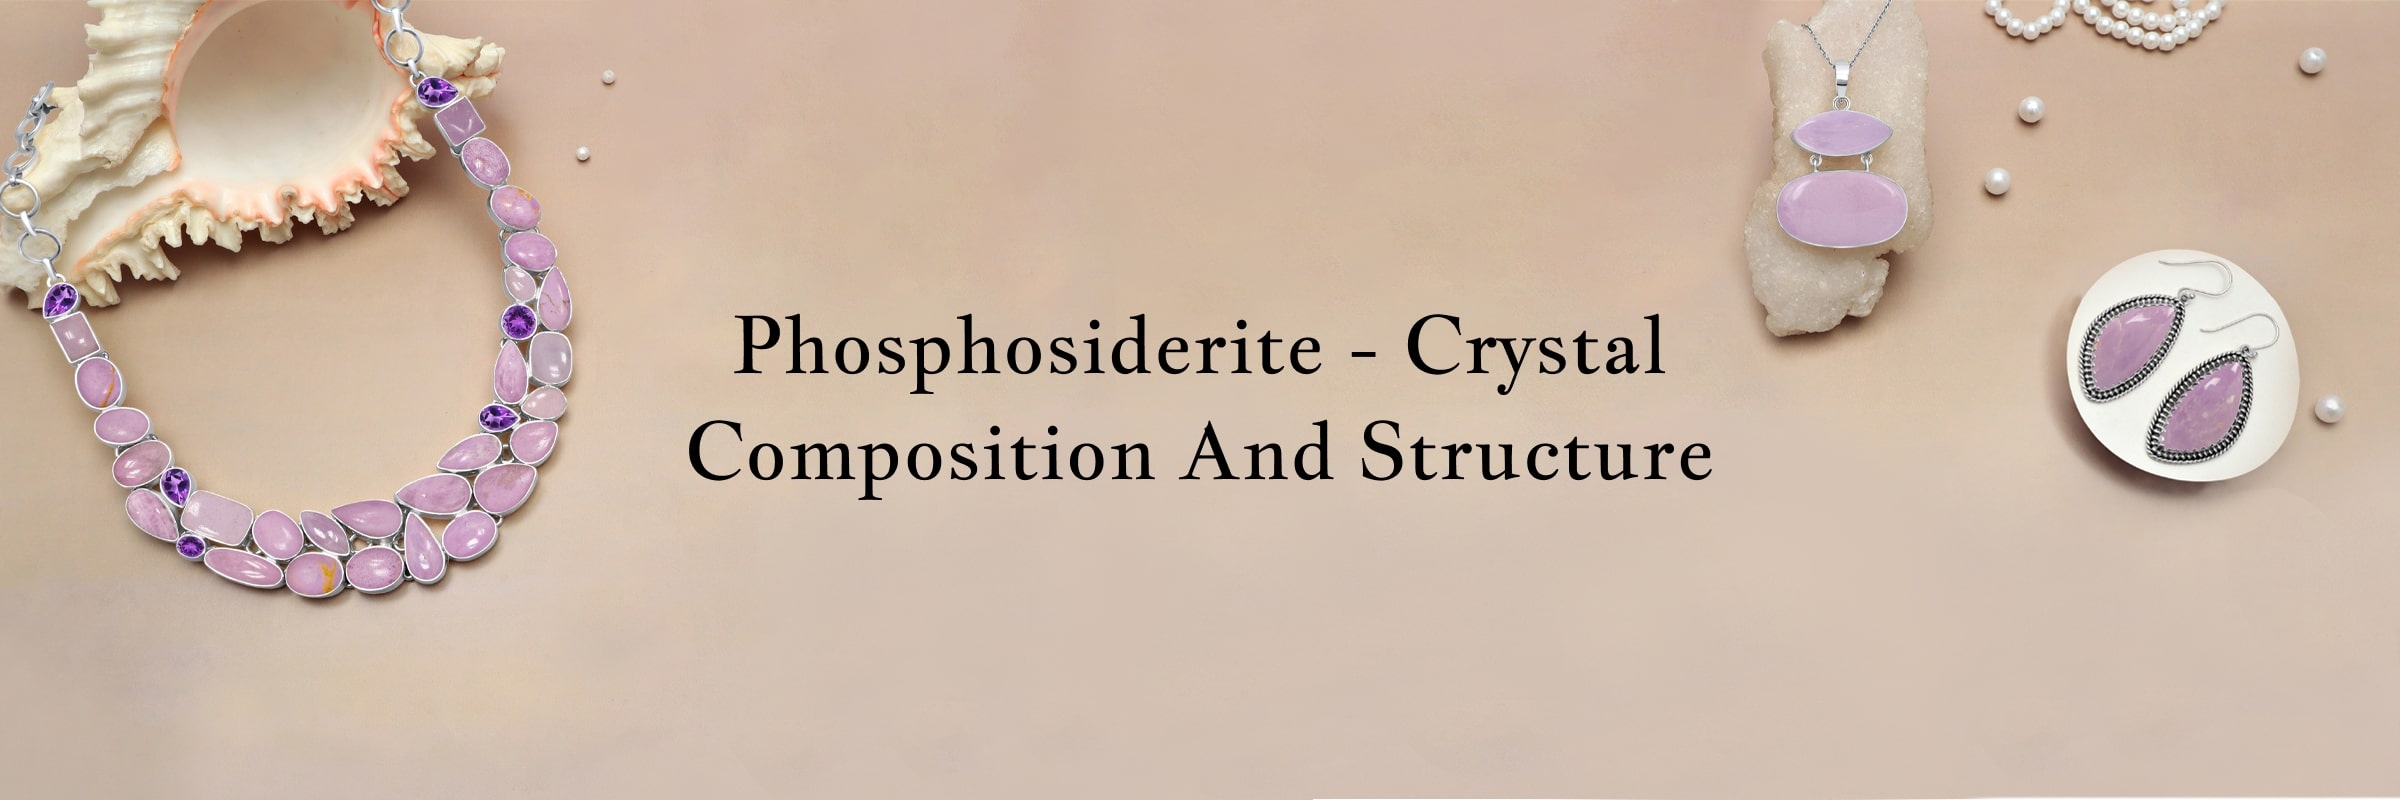 Physical Properties of Phosphosiderite Crystal